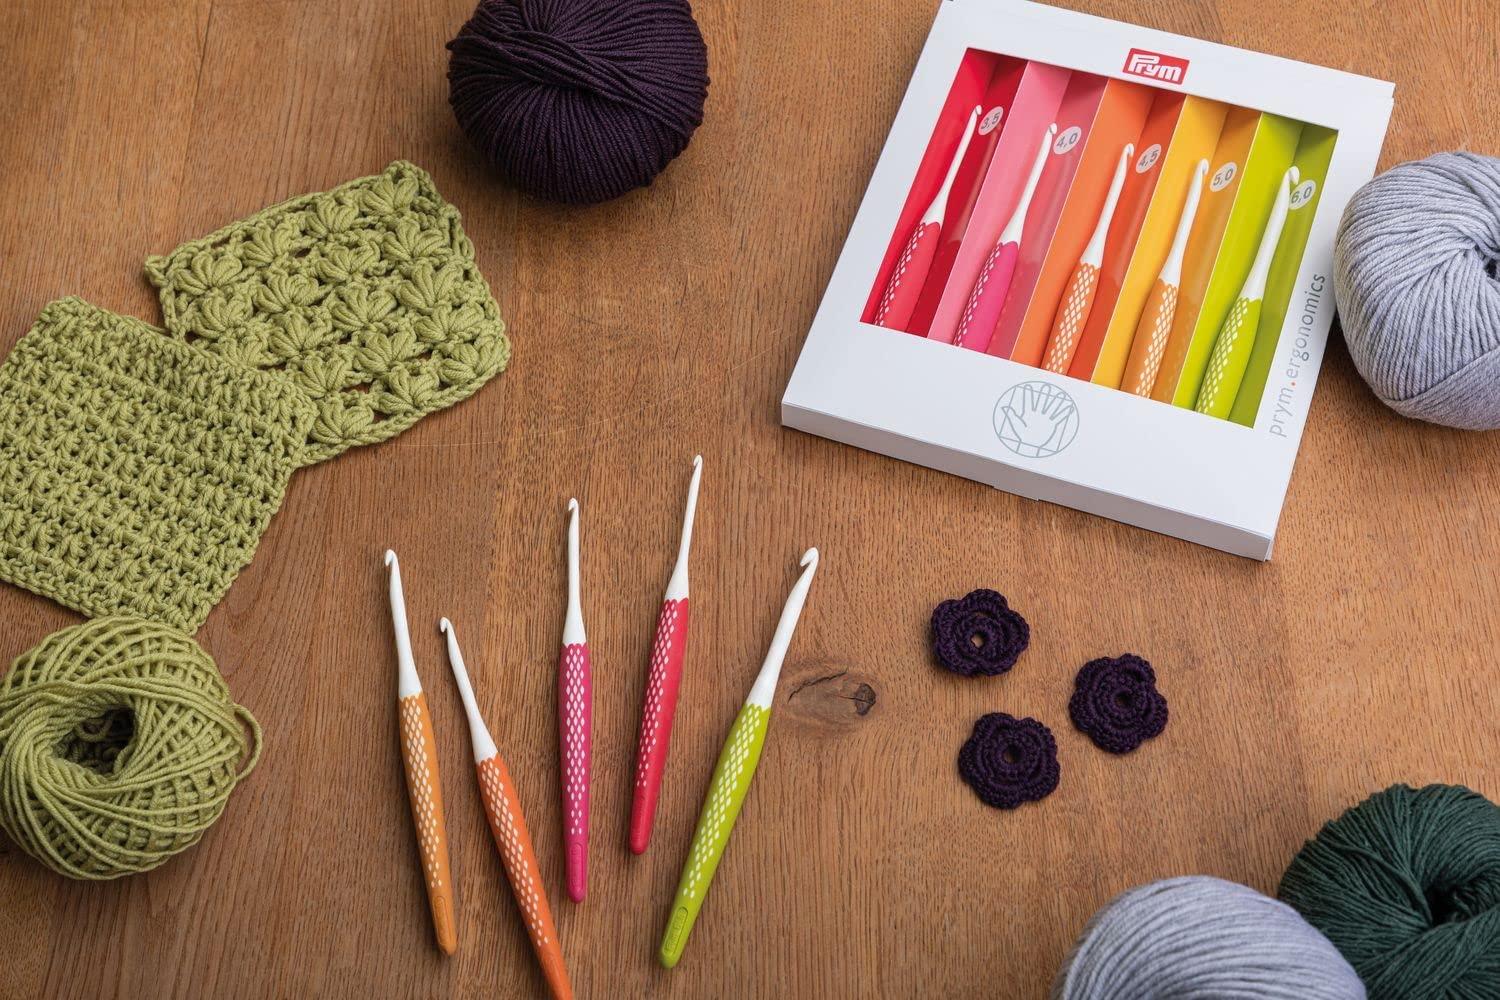 Prym Crochet Hook for Wool Ergonomics 3.50-6.00 mm x 1 Set, Multi, One Size